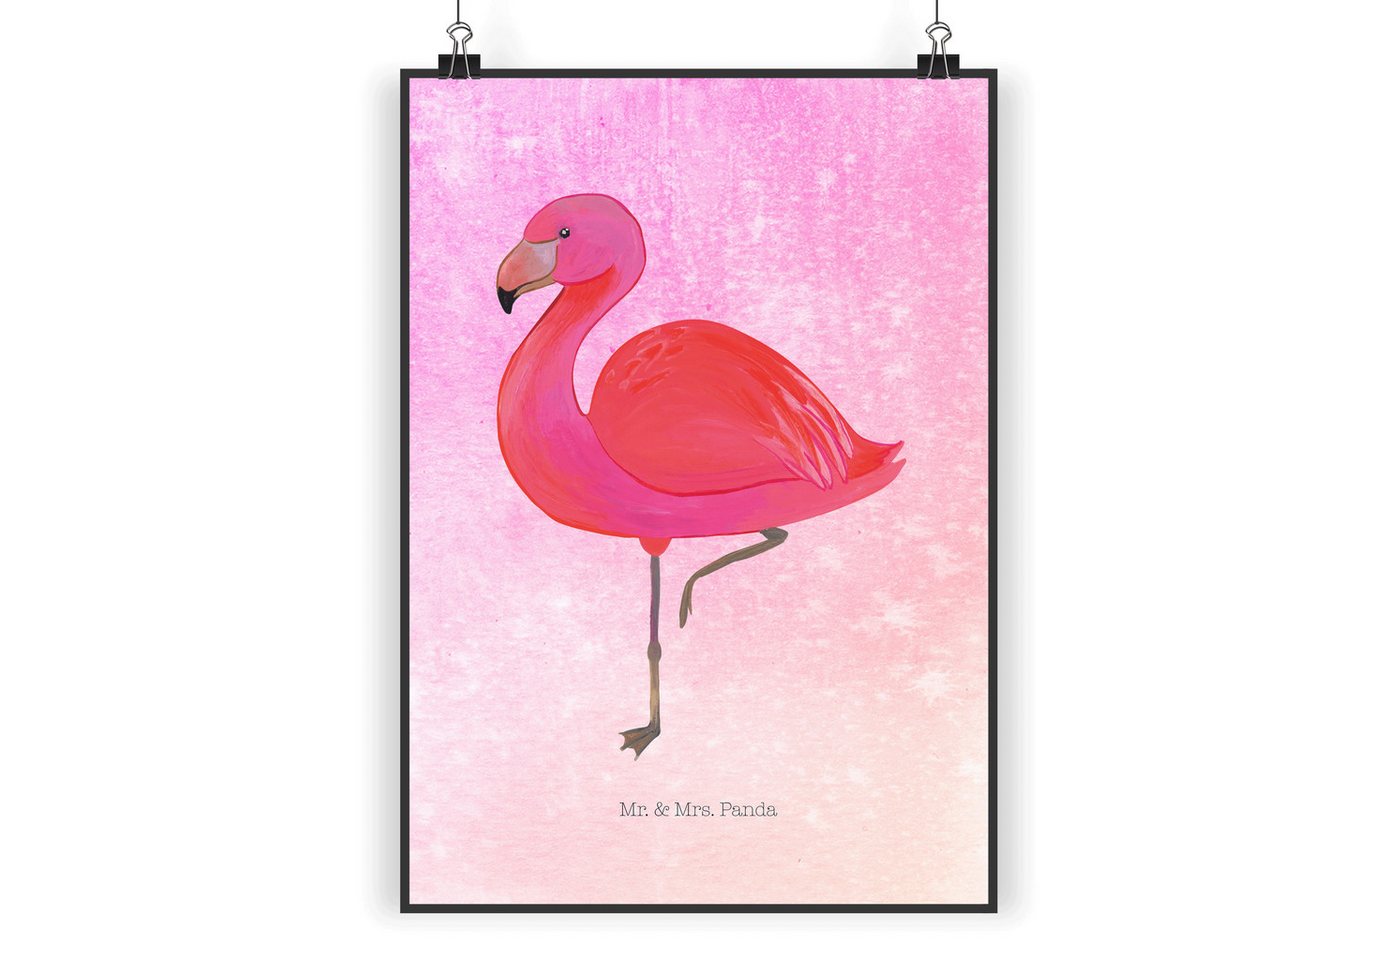 Mr. & Mrs. Panda Poster DIN A3 Flamingo Classic - Aquarell Pink - Geschenk, Wanddeko, stolz, Flamingo classic (1 St), Lebensfrohes Design von Mr. & Mrs. Panda